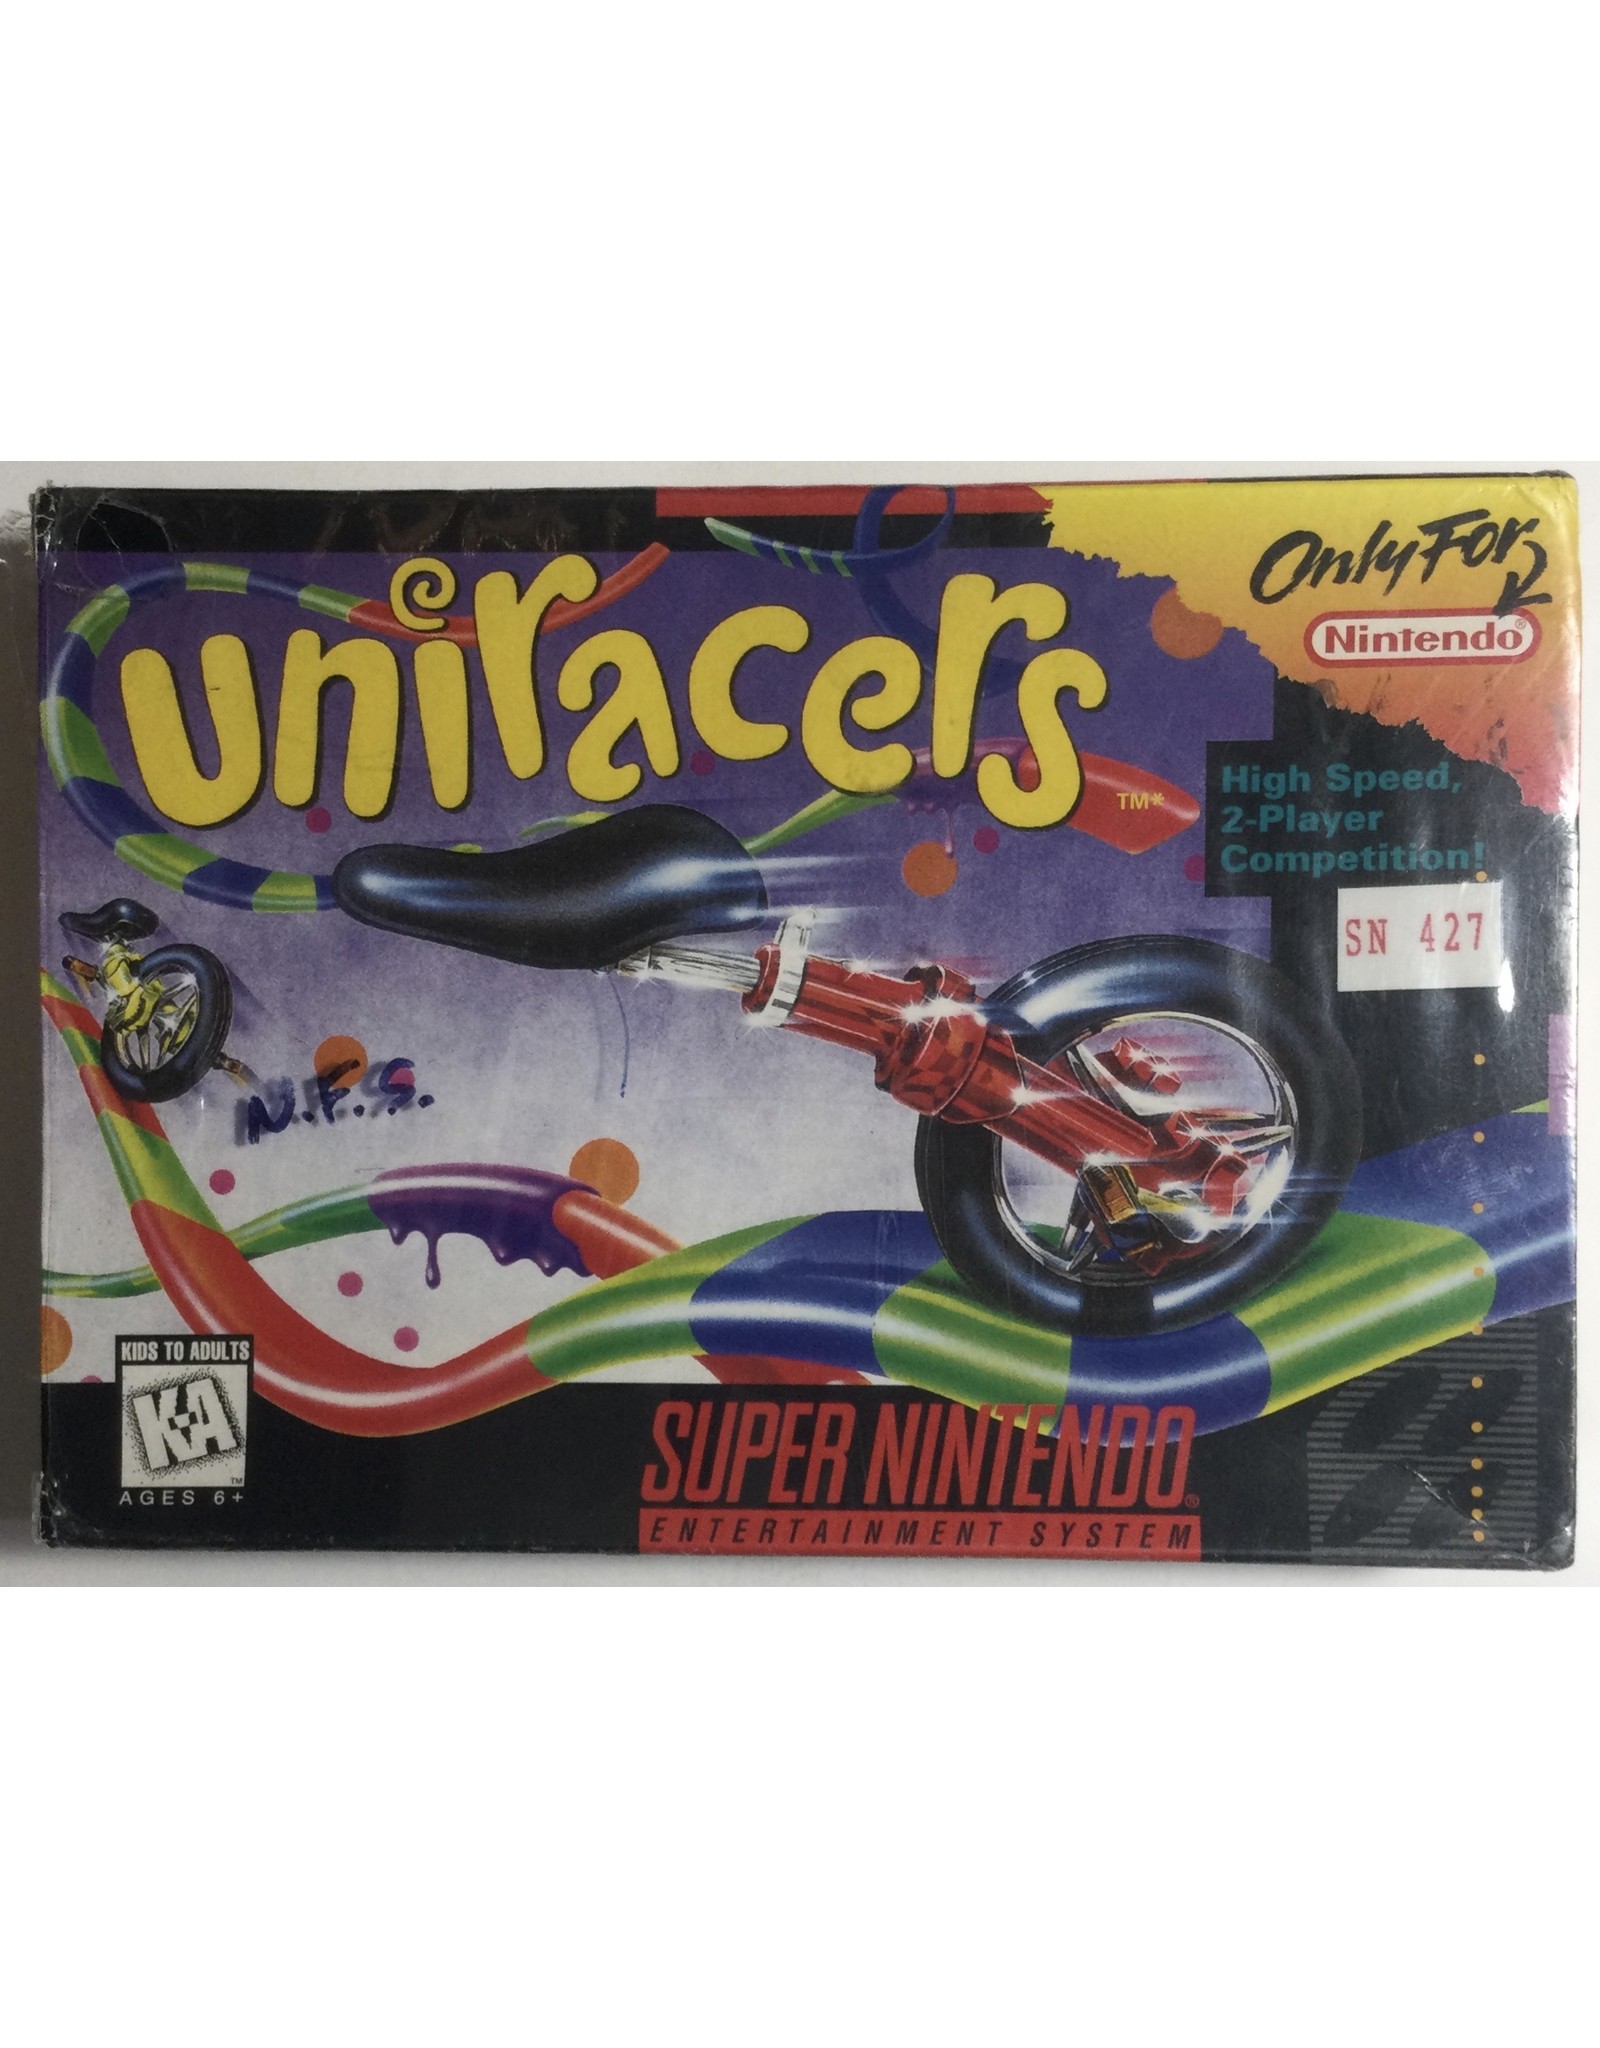 Nintendo Uniracers for Super Nintendo Entertainment System (SNES) - CIB